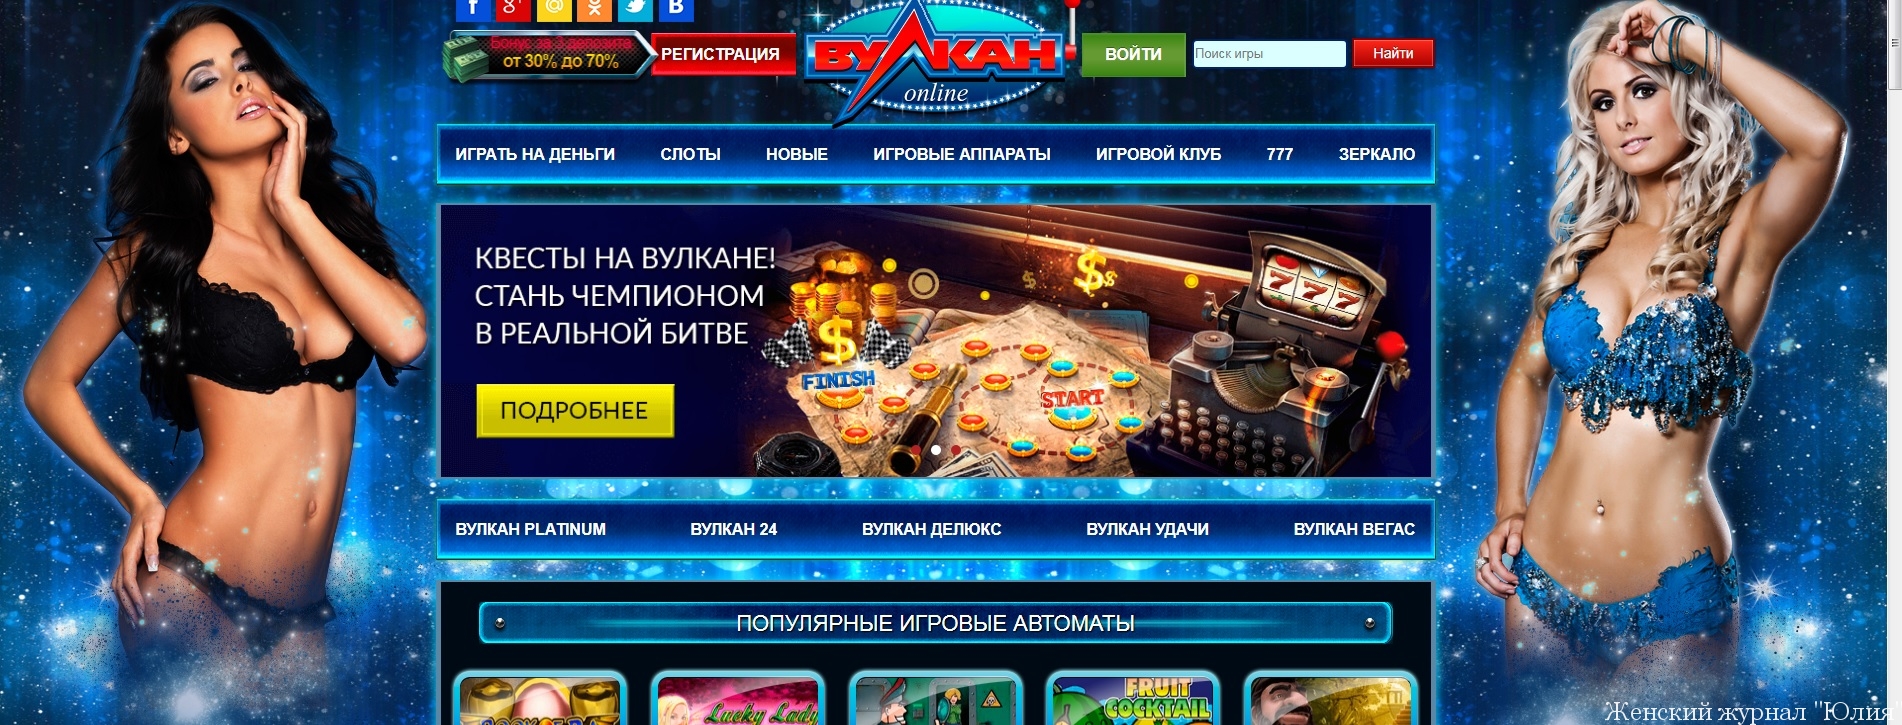 Онлайн казино вулкан клуб зеркало вход игровой автомат fairy land лягушки casino vulcan com